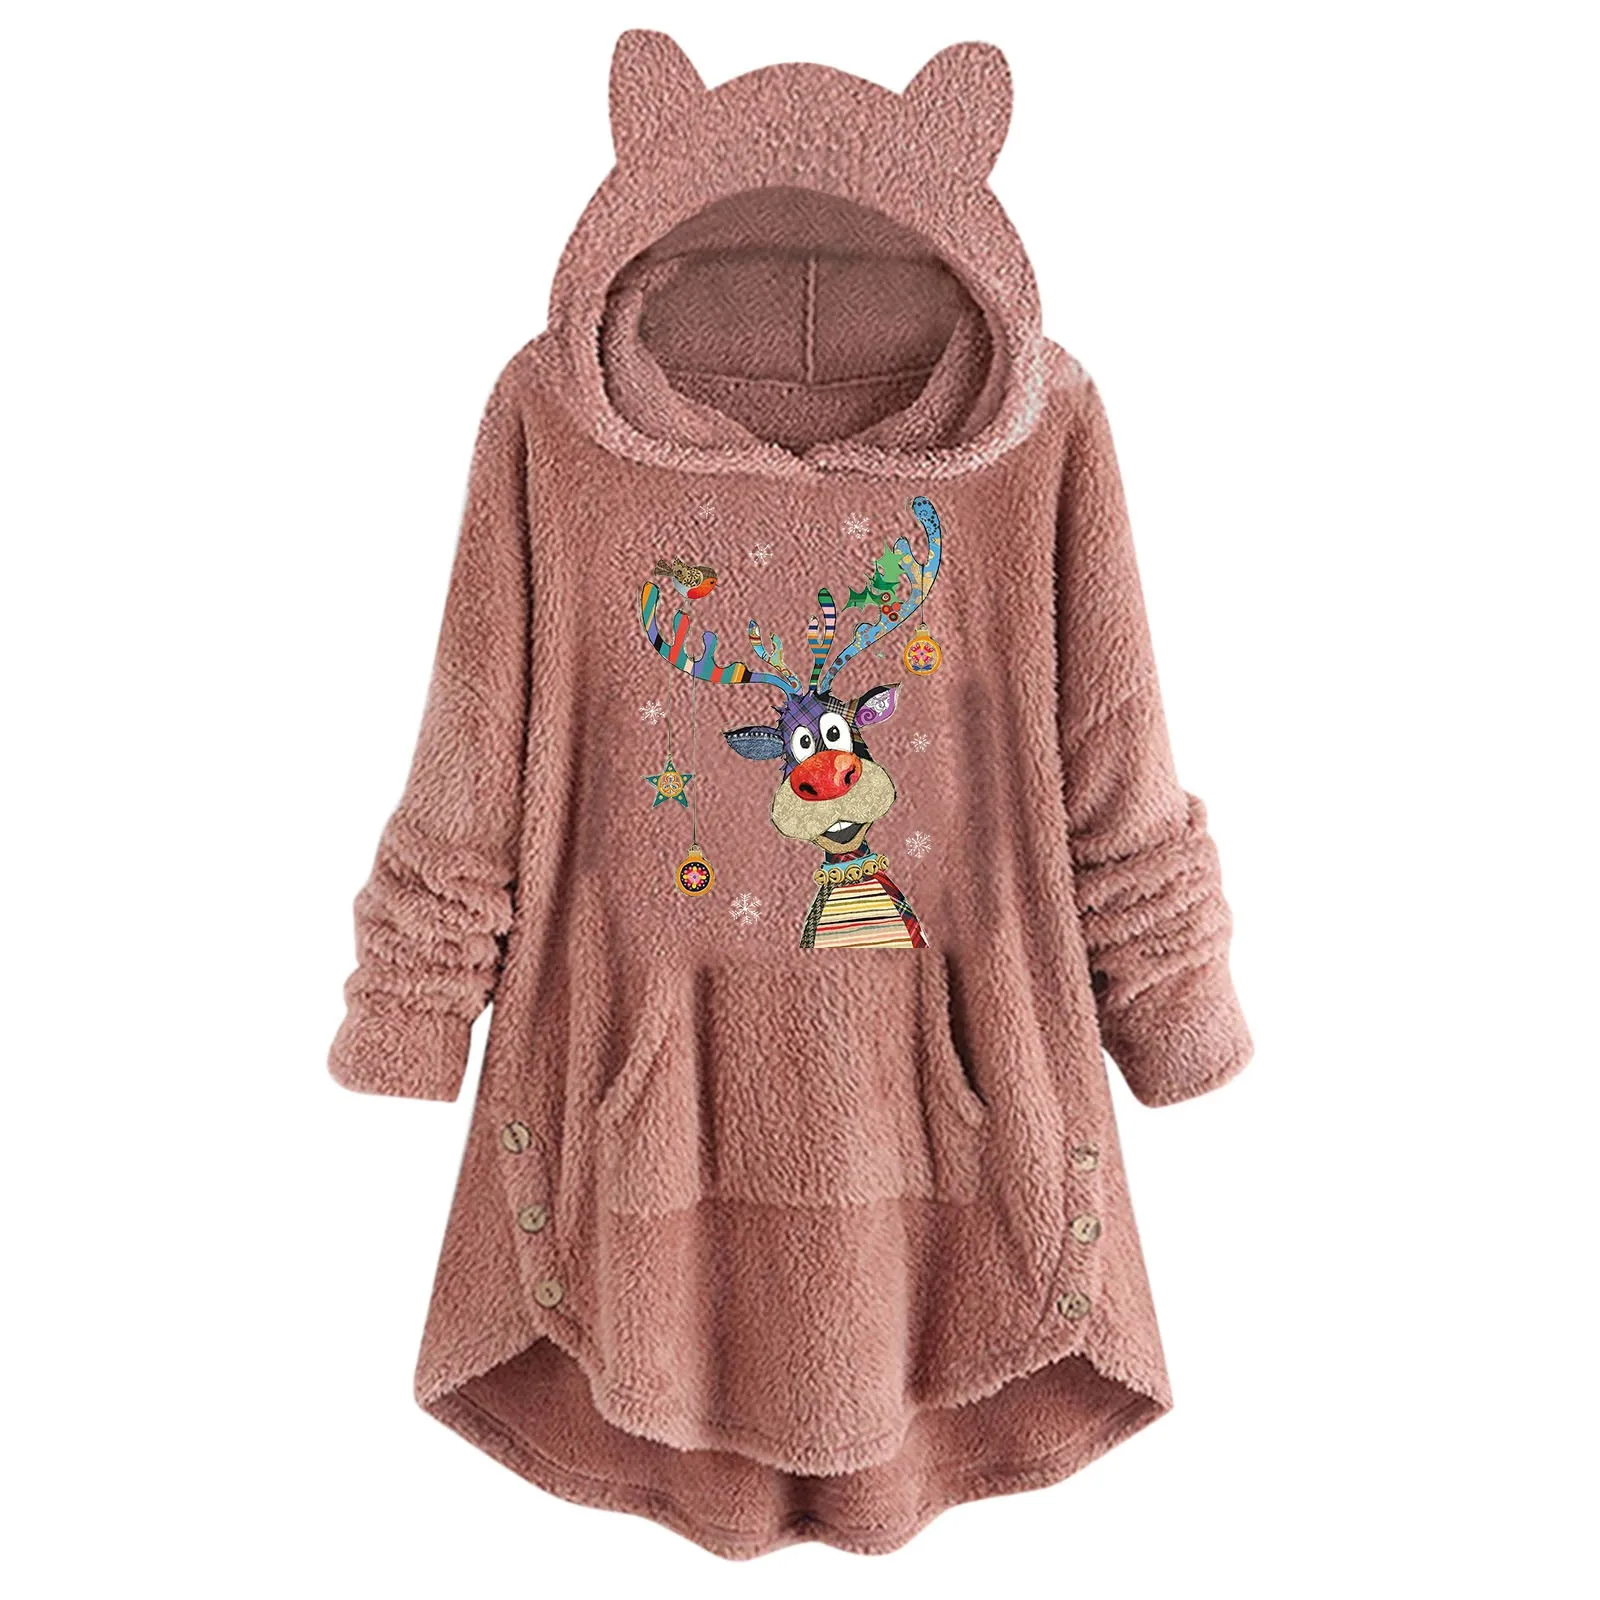 

Essentials Women's Christmas Overcoat Plush Warm Coat Long Sleeve Artistic Deer Print Hoodie Pullover Jacket with Pocket